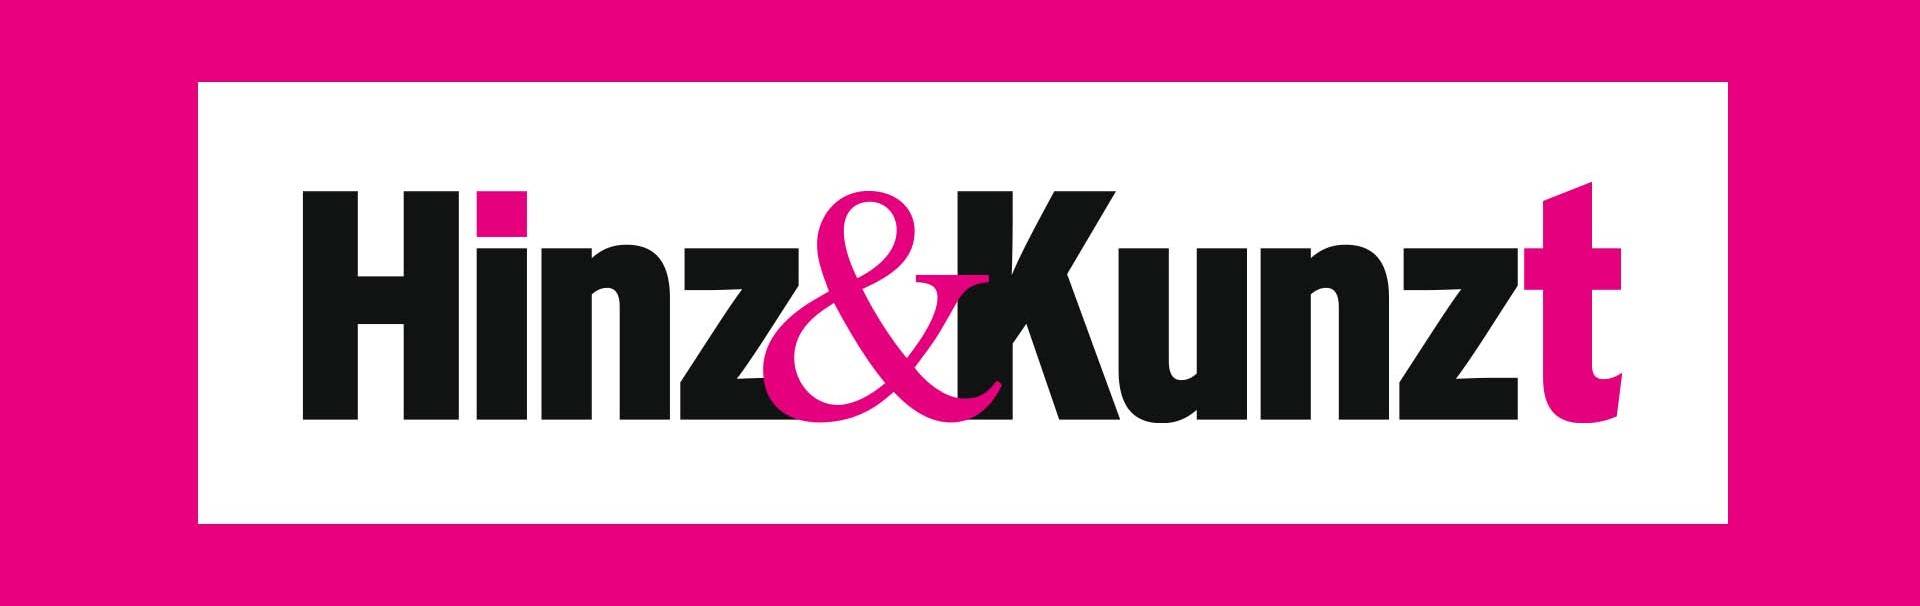 Hinz&Kunzt Logo - SCHOKOLADENSEITE.net Projektpartner